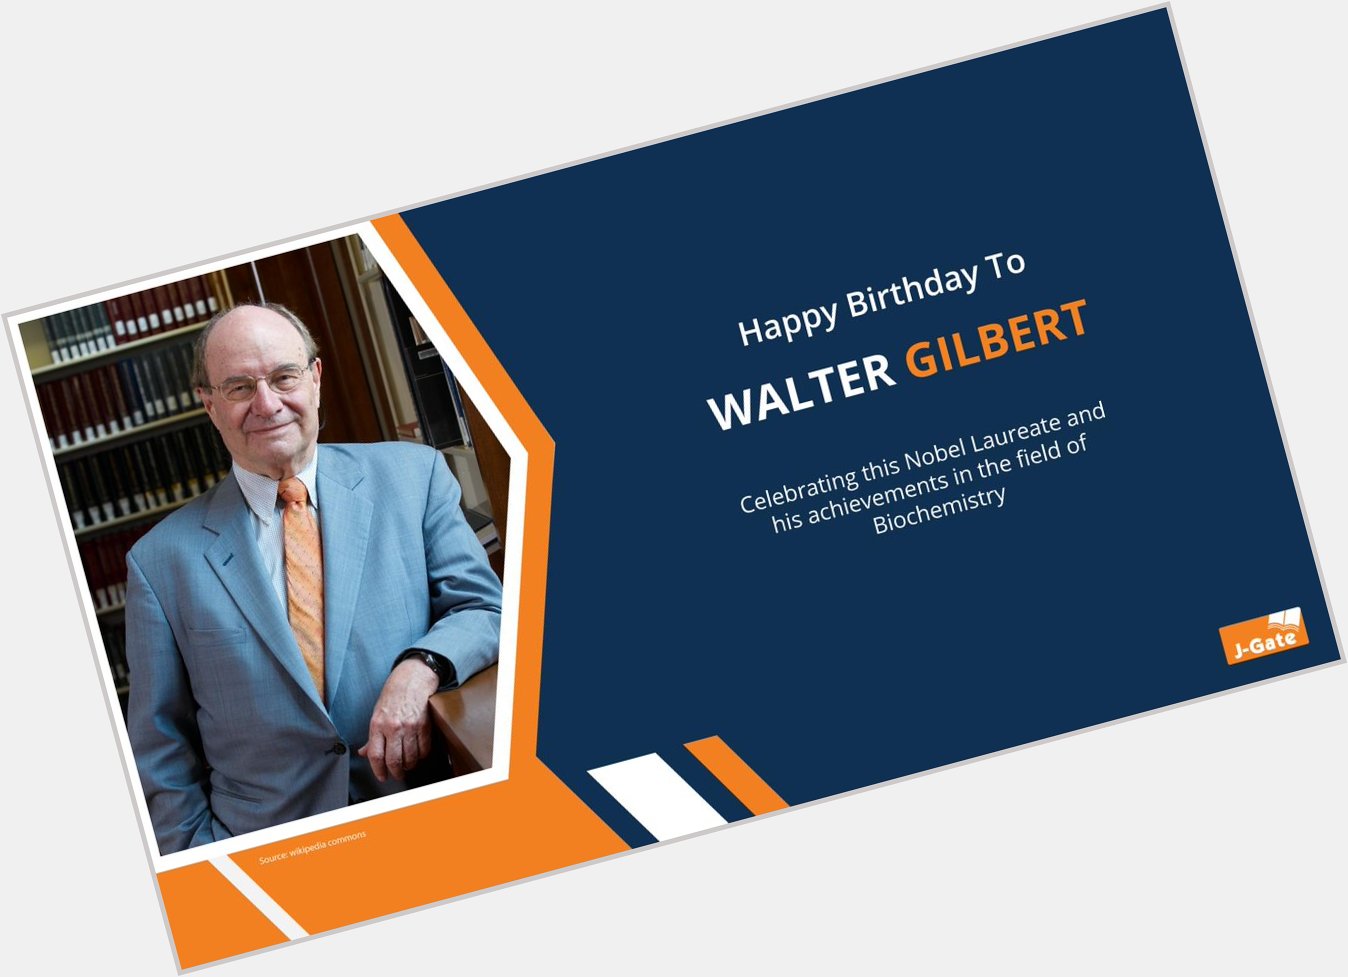 Wishing a very happy birthday to Walter Gilbert  